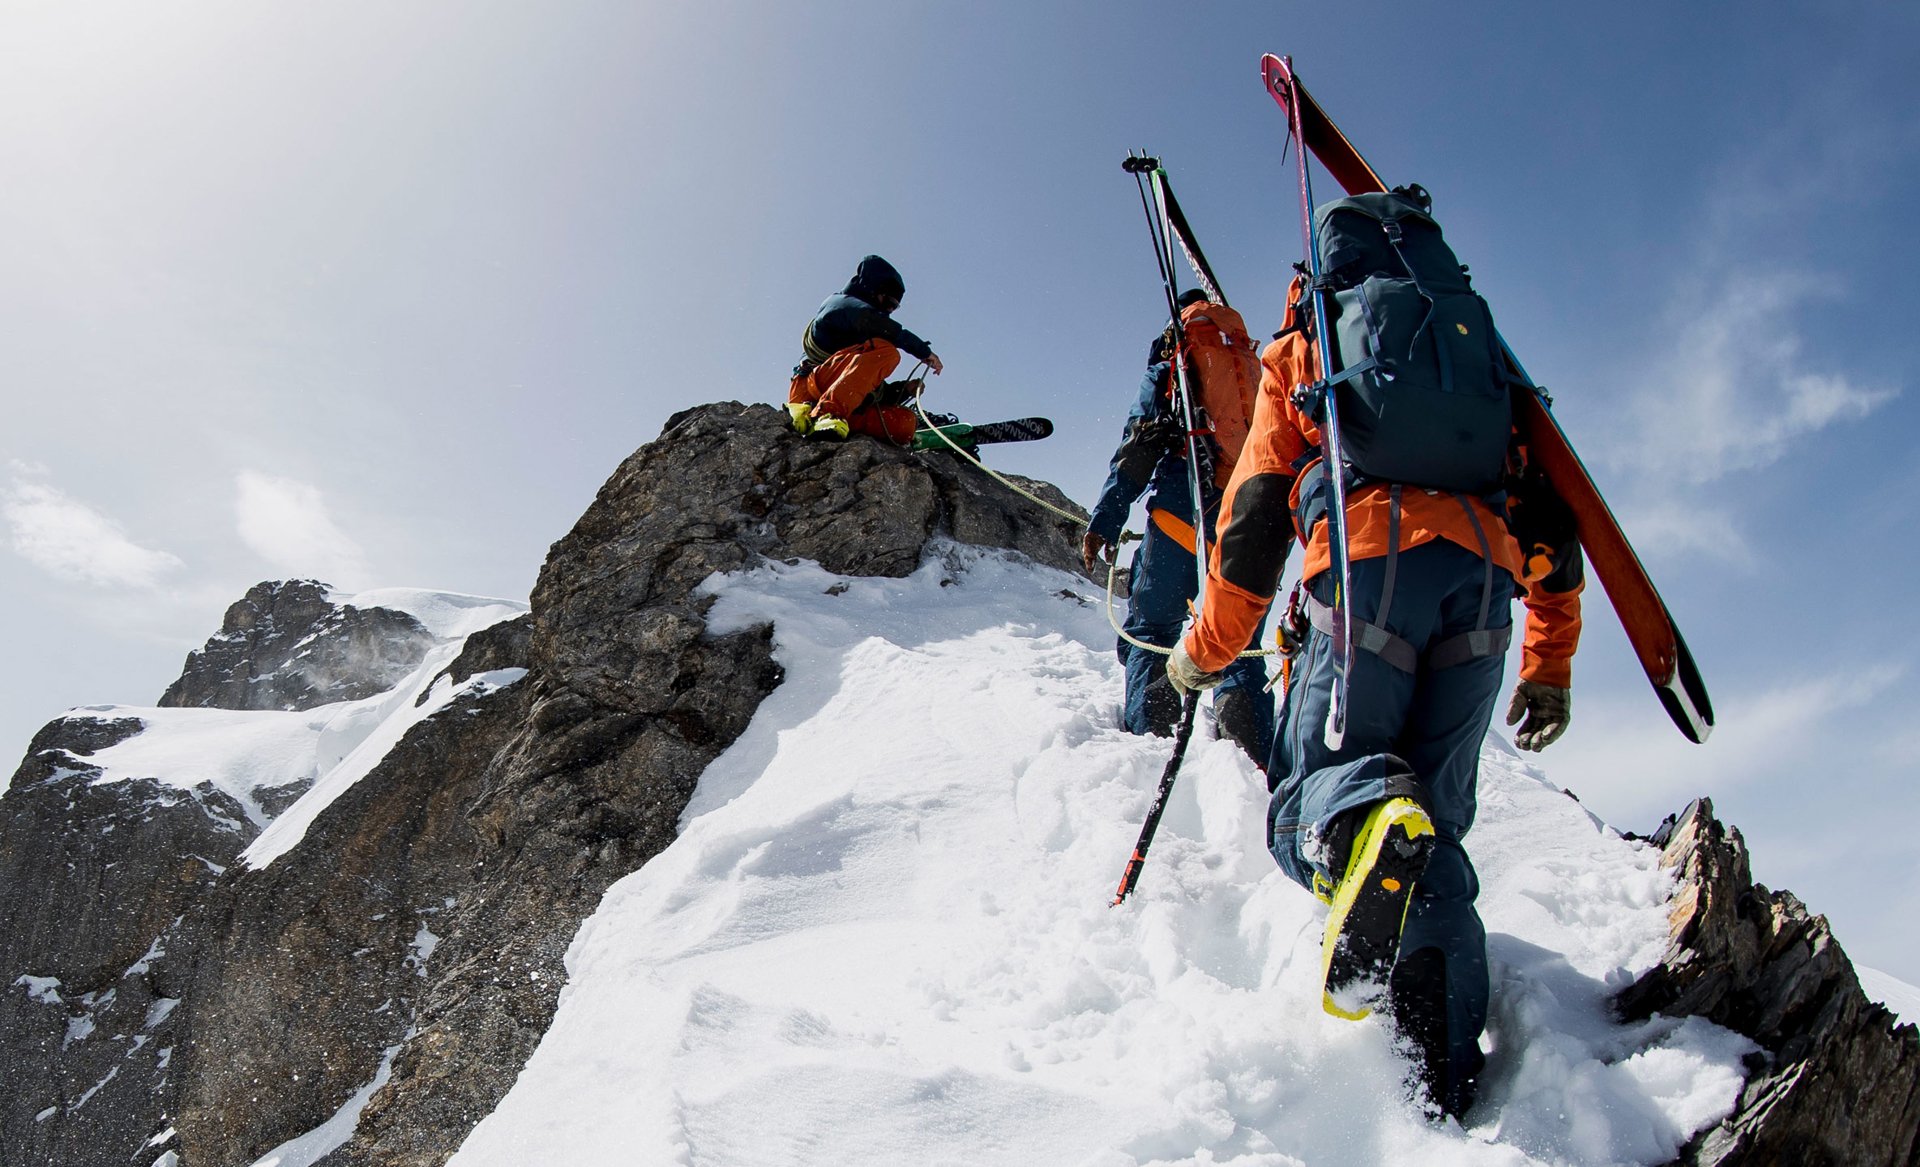 Three people sumitting a mountain with ski gear